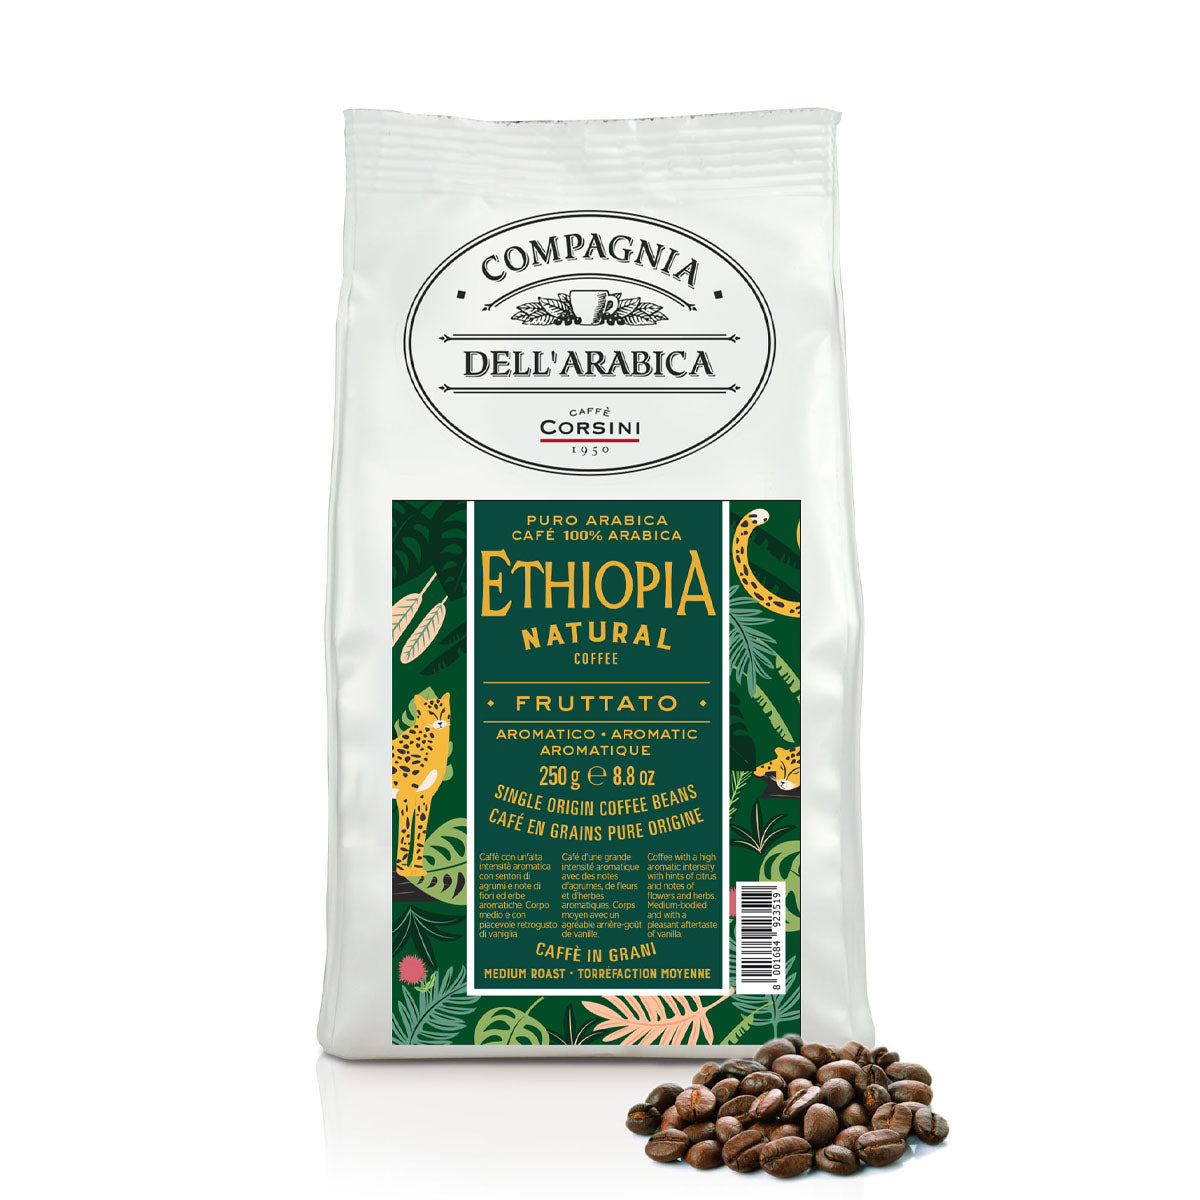 Caffè in grani | Ethiopia Natural Coffee | 100% Arabica | 250g